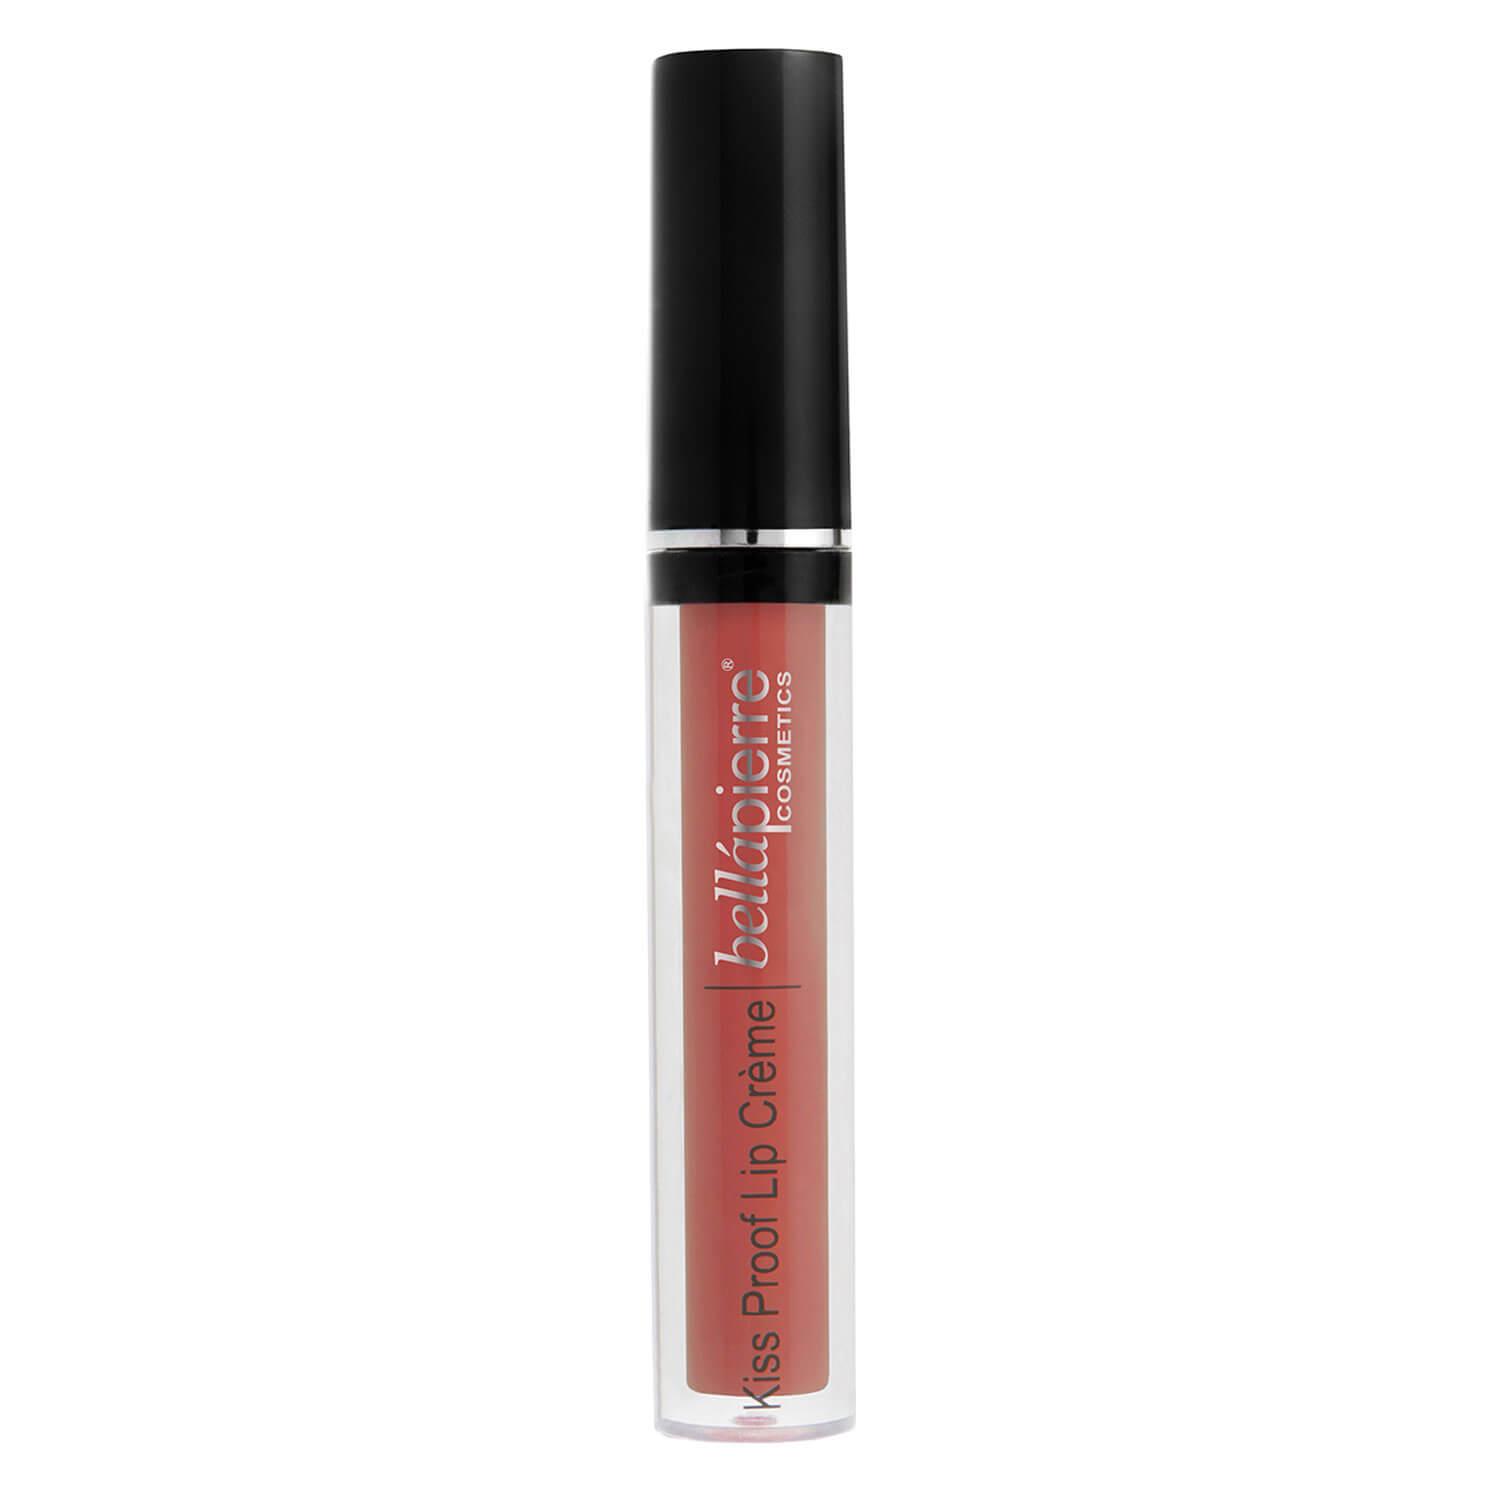 bellapierre Lips - Kiss Proof Lip Crème Coral Stone